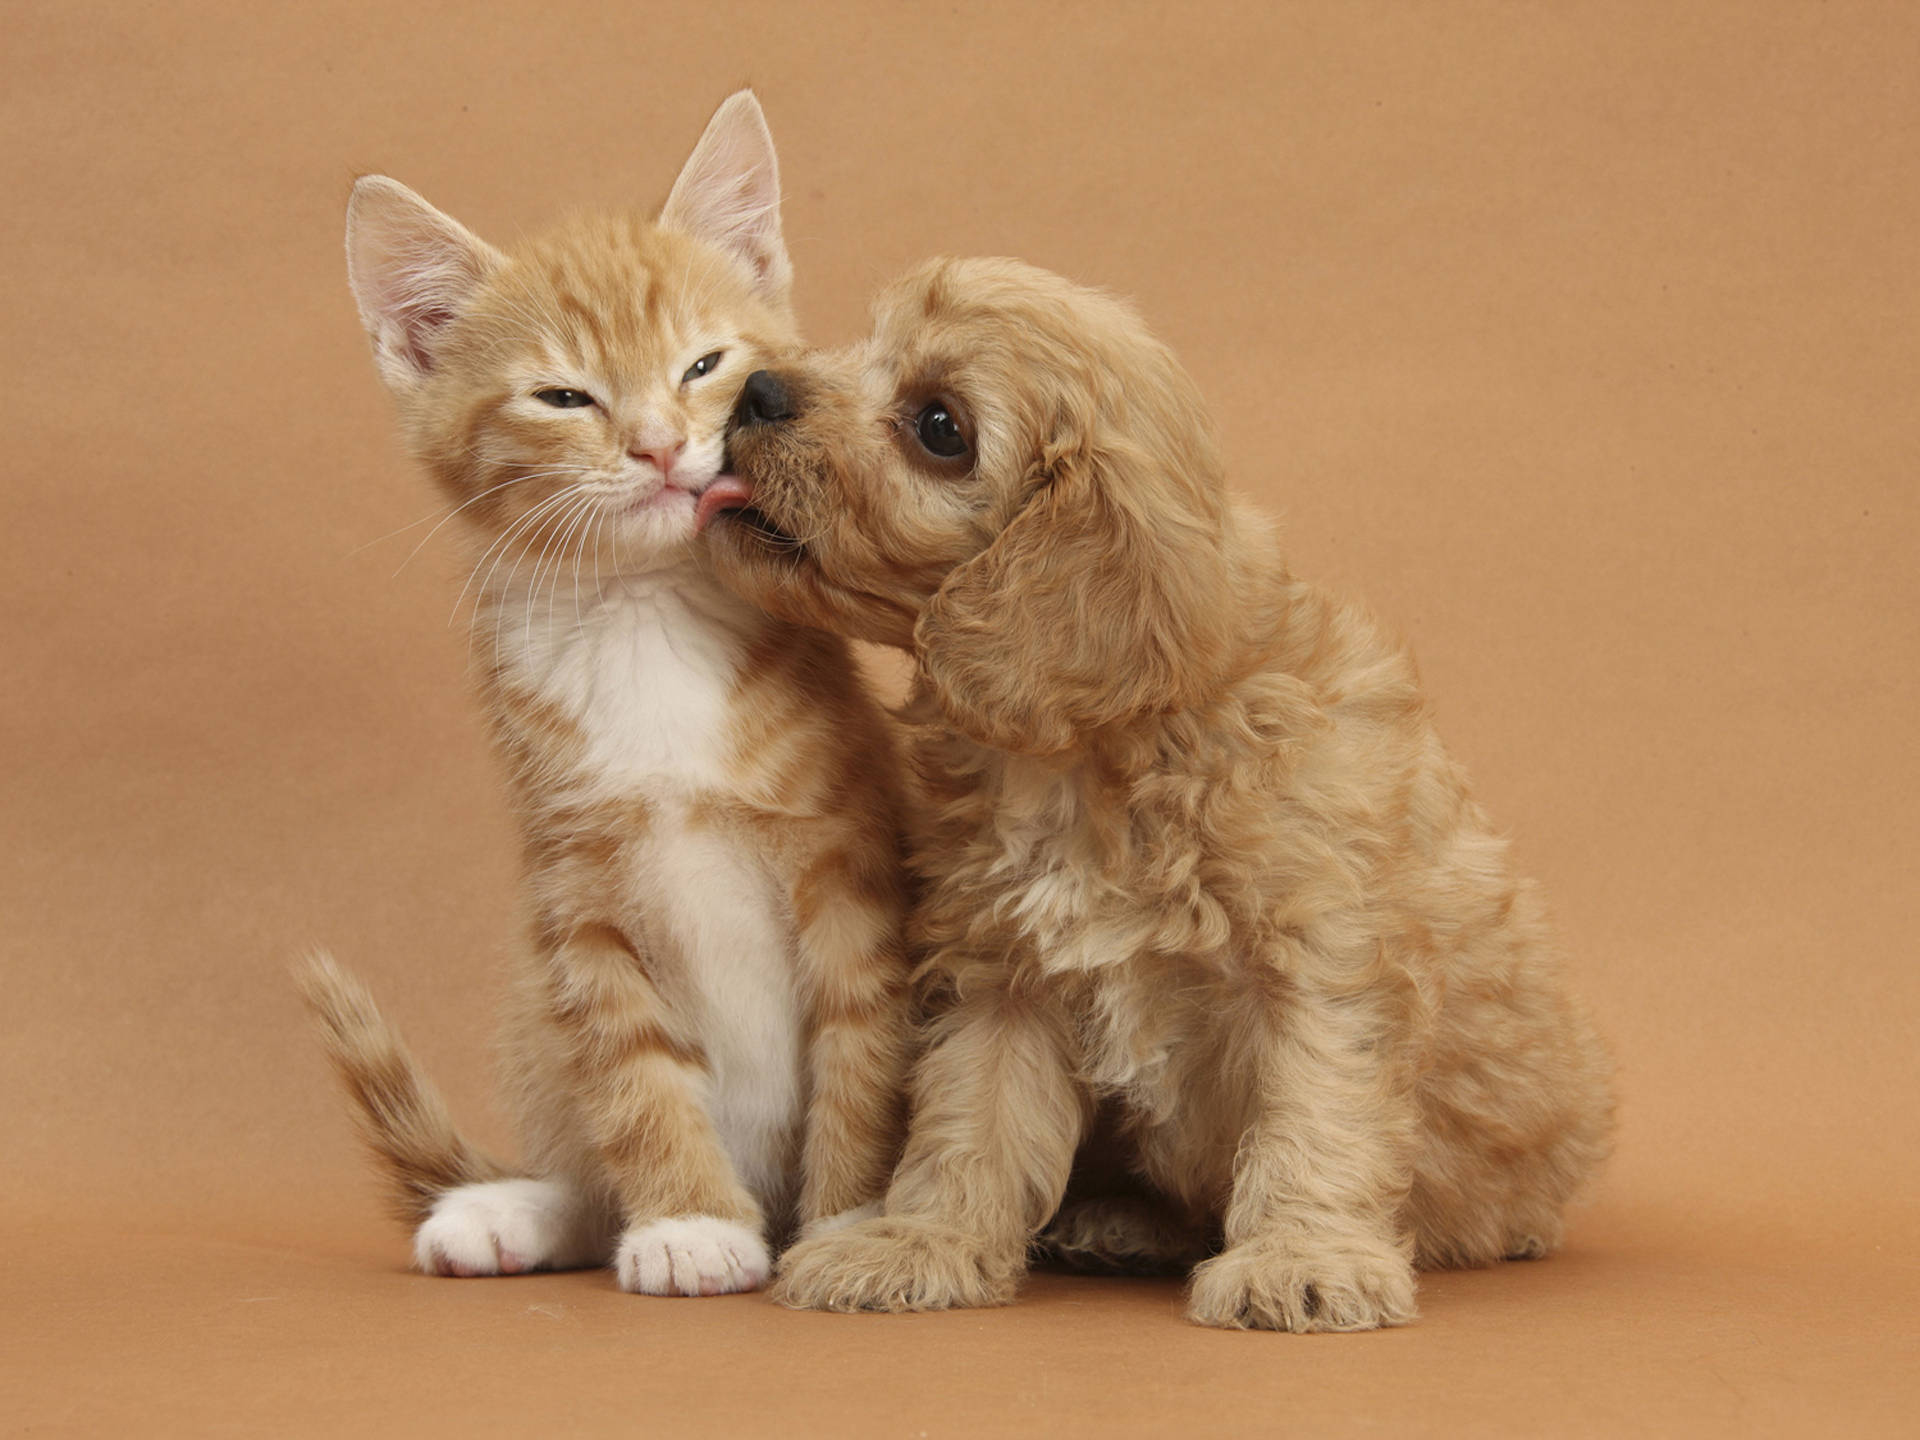 Dog Licking Cat Image Wallpaper